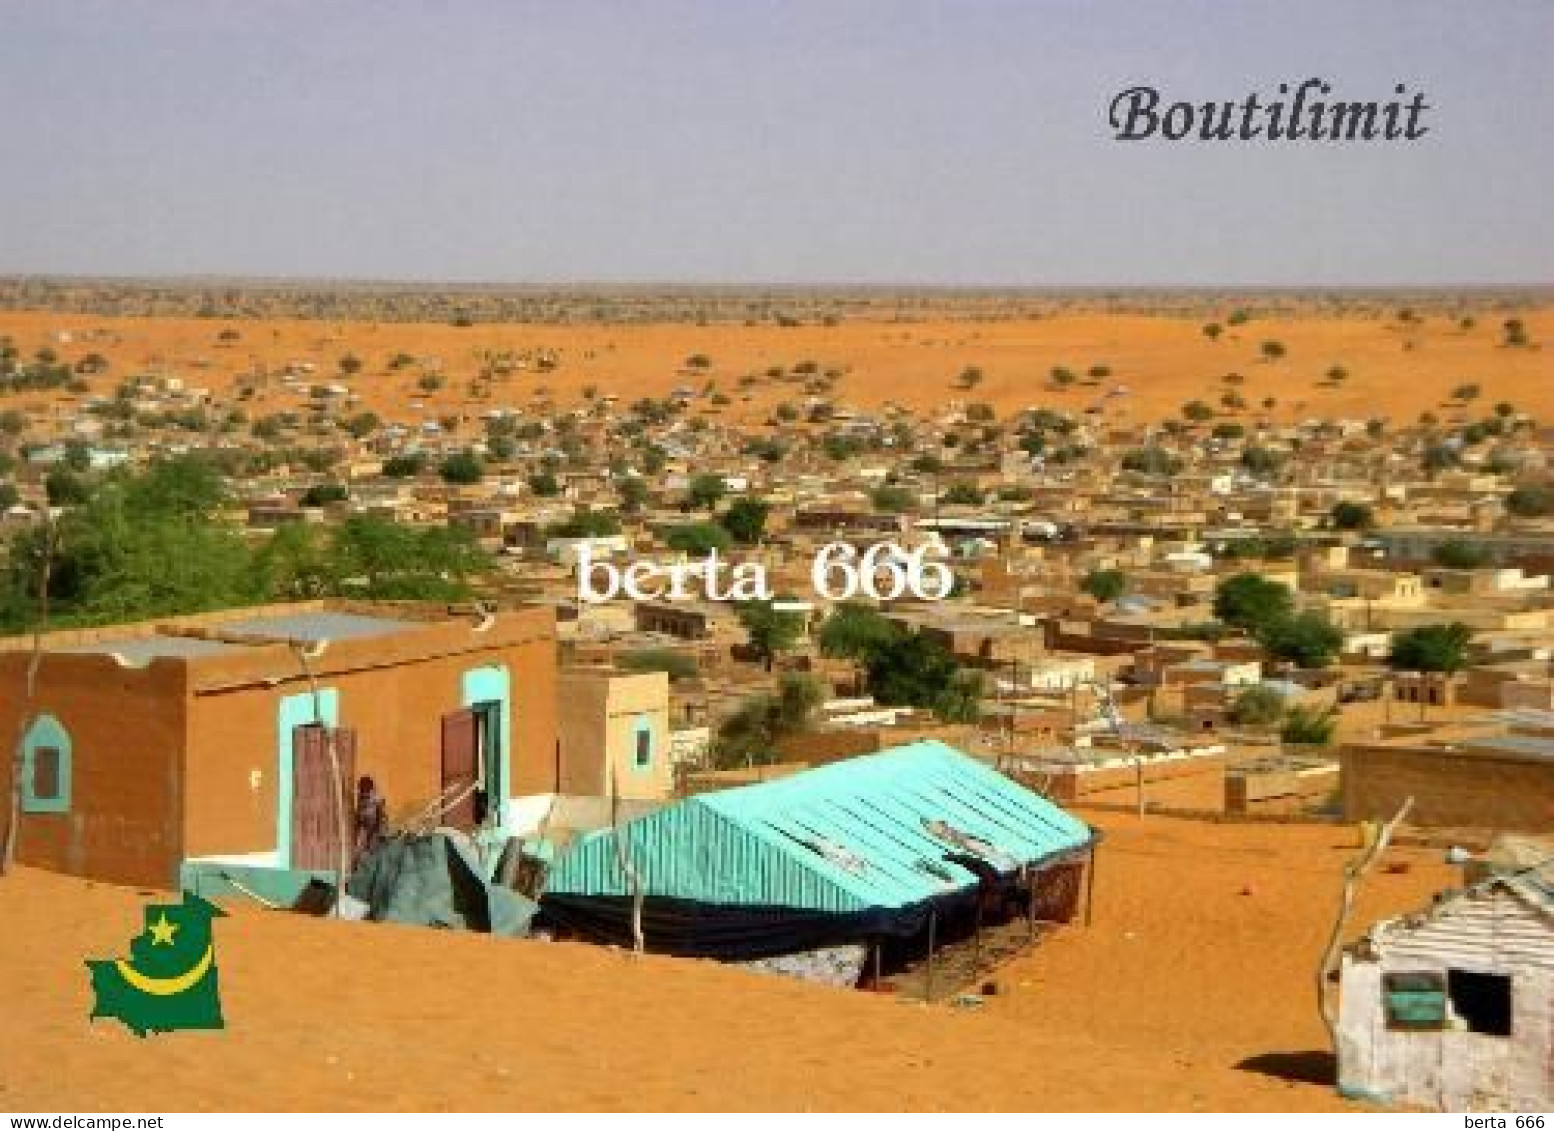 Mauritania Boutilimit View New Postcard - Mauritania